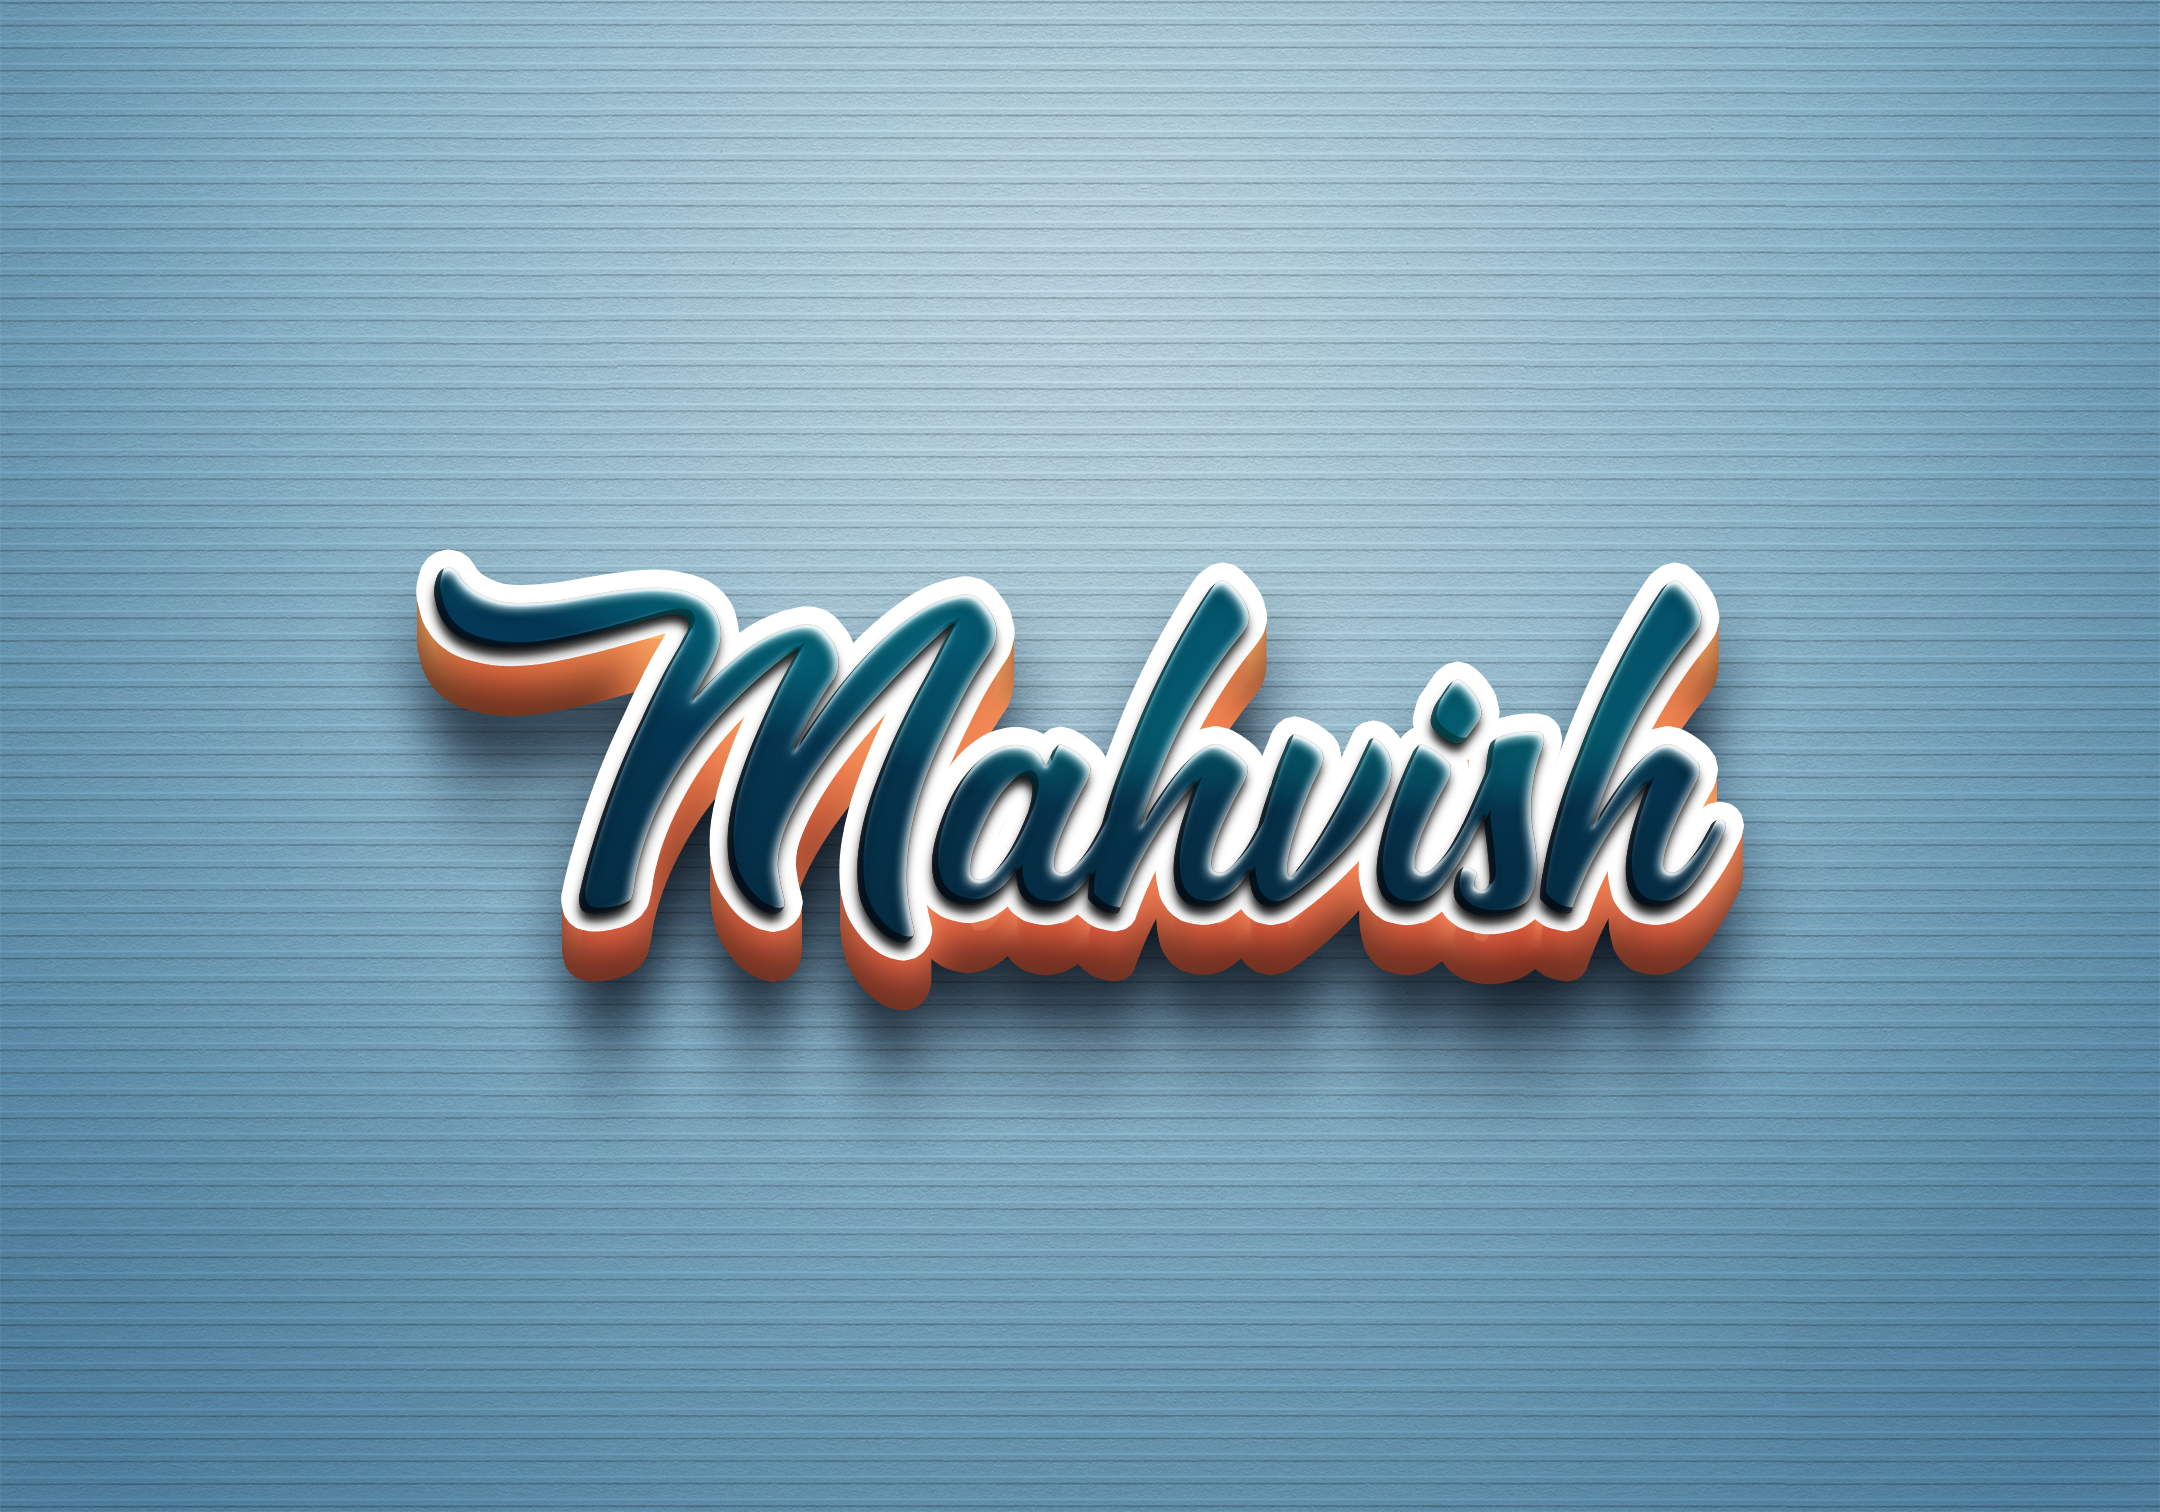 Mahesh | Signature generator, Nice handwriting, Stylish signature ideas